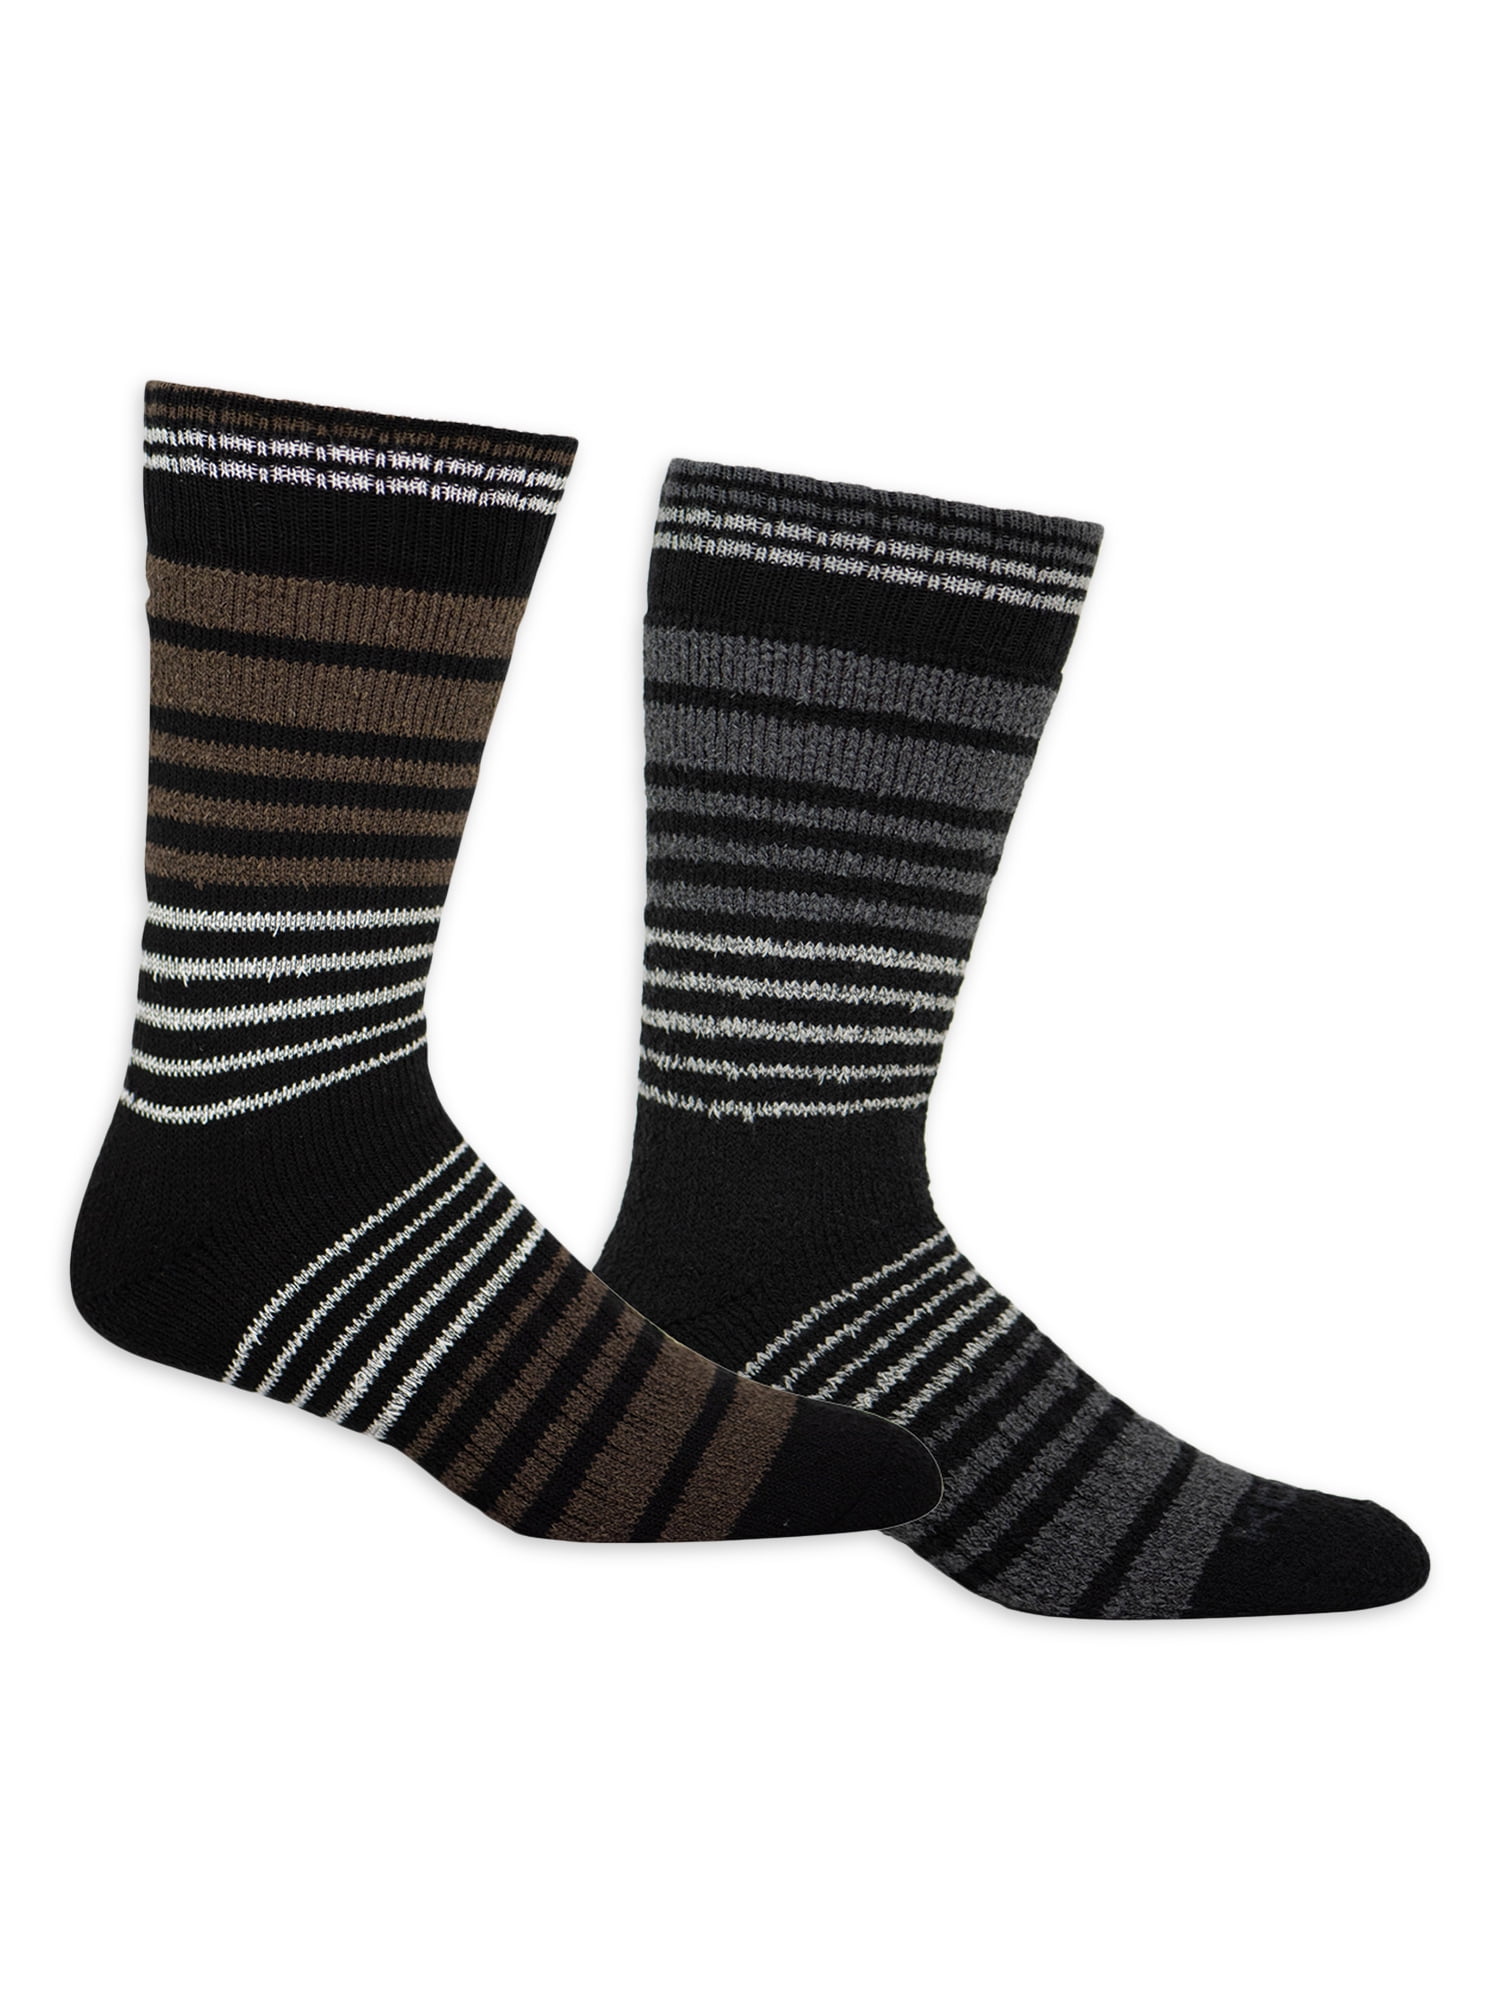 Kodiak Men's Thermal Cotton Crew Socks - 2-pack - Walmart.com